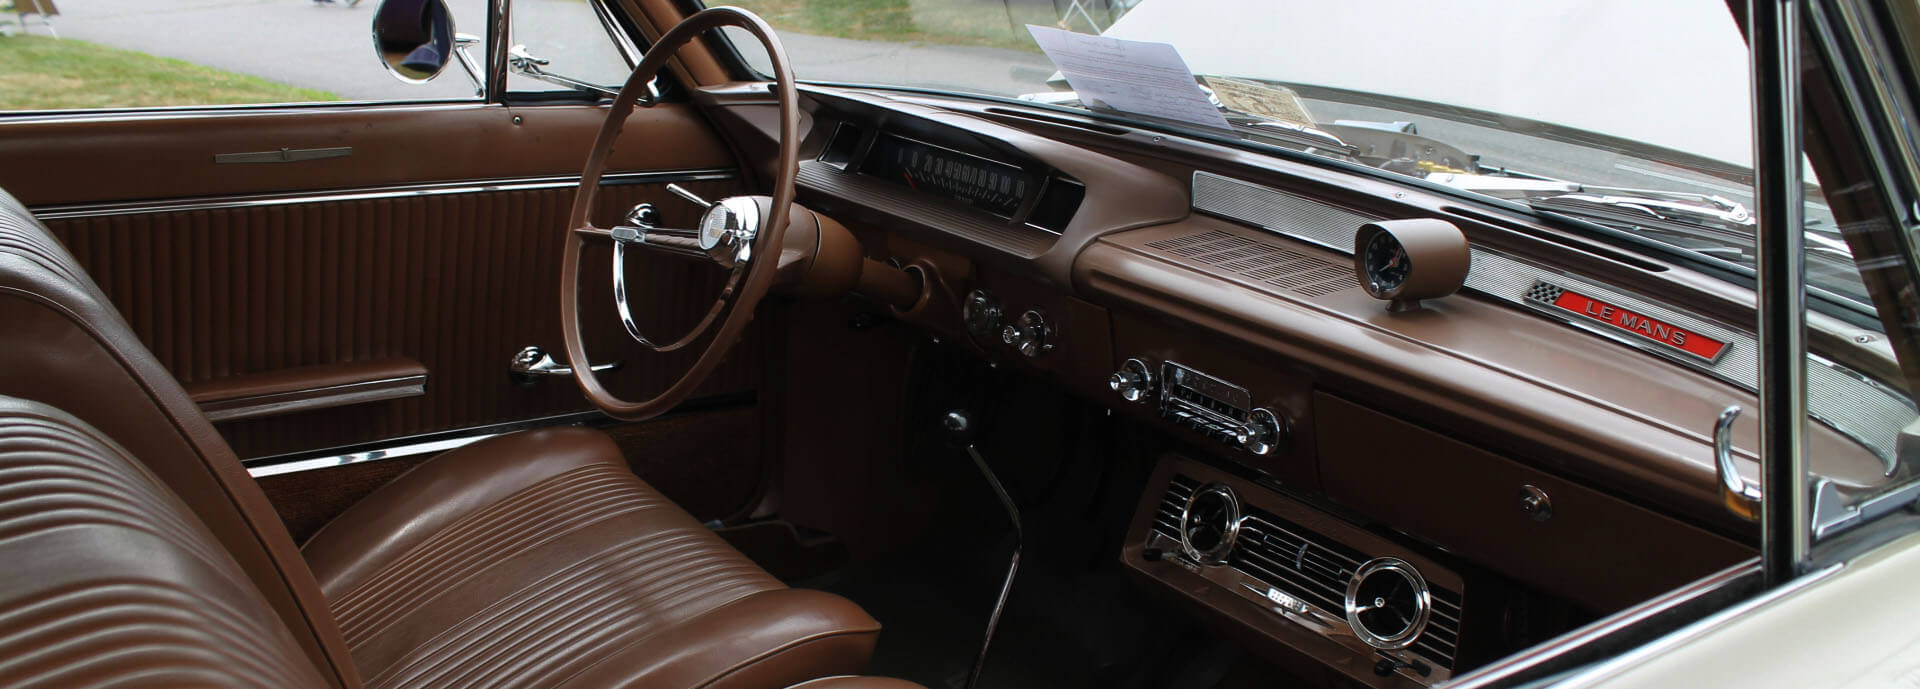 Oldsmobile Ciera dash kit